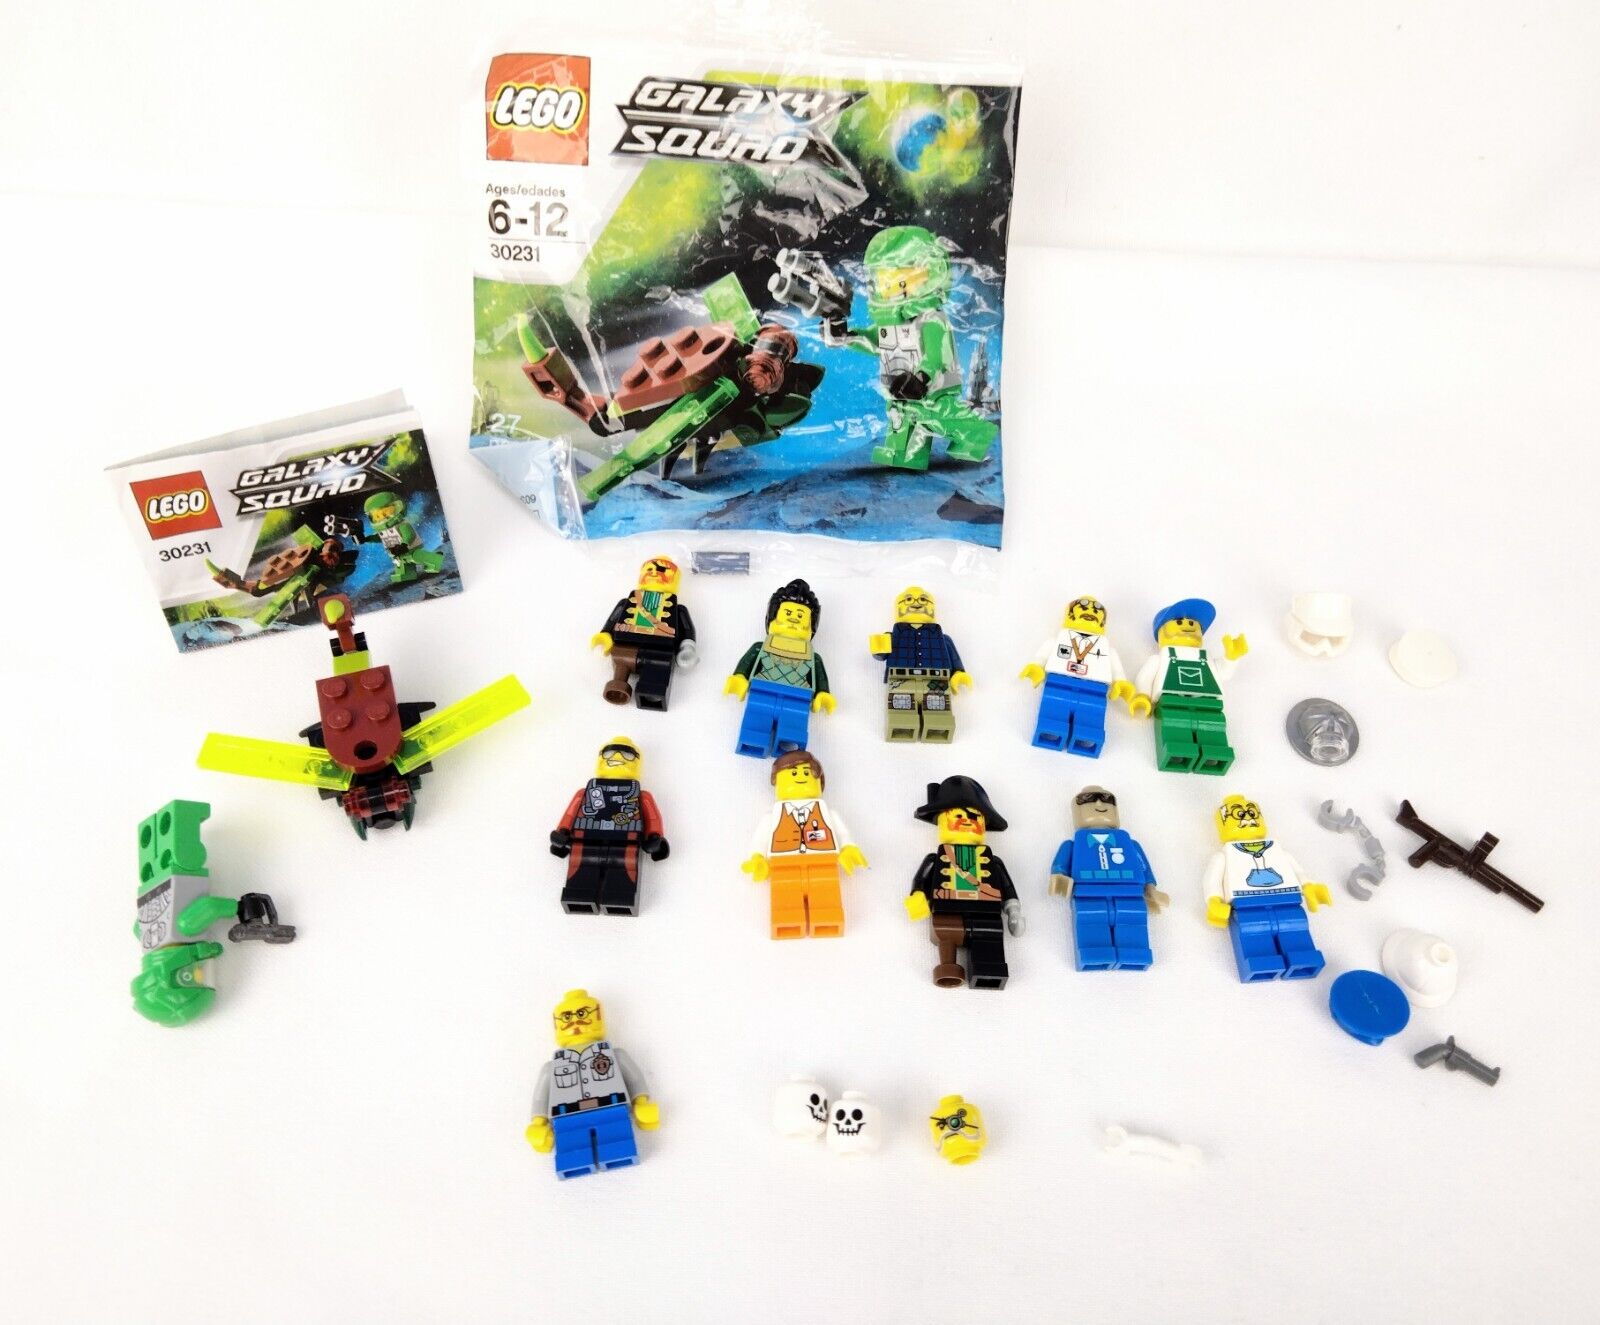 Lego Mini Figures And & Galaxy Squad Set 30231 Pirates Film Crew MD's Farmer